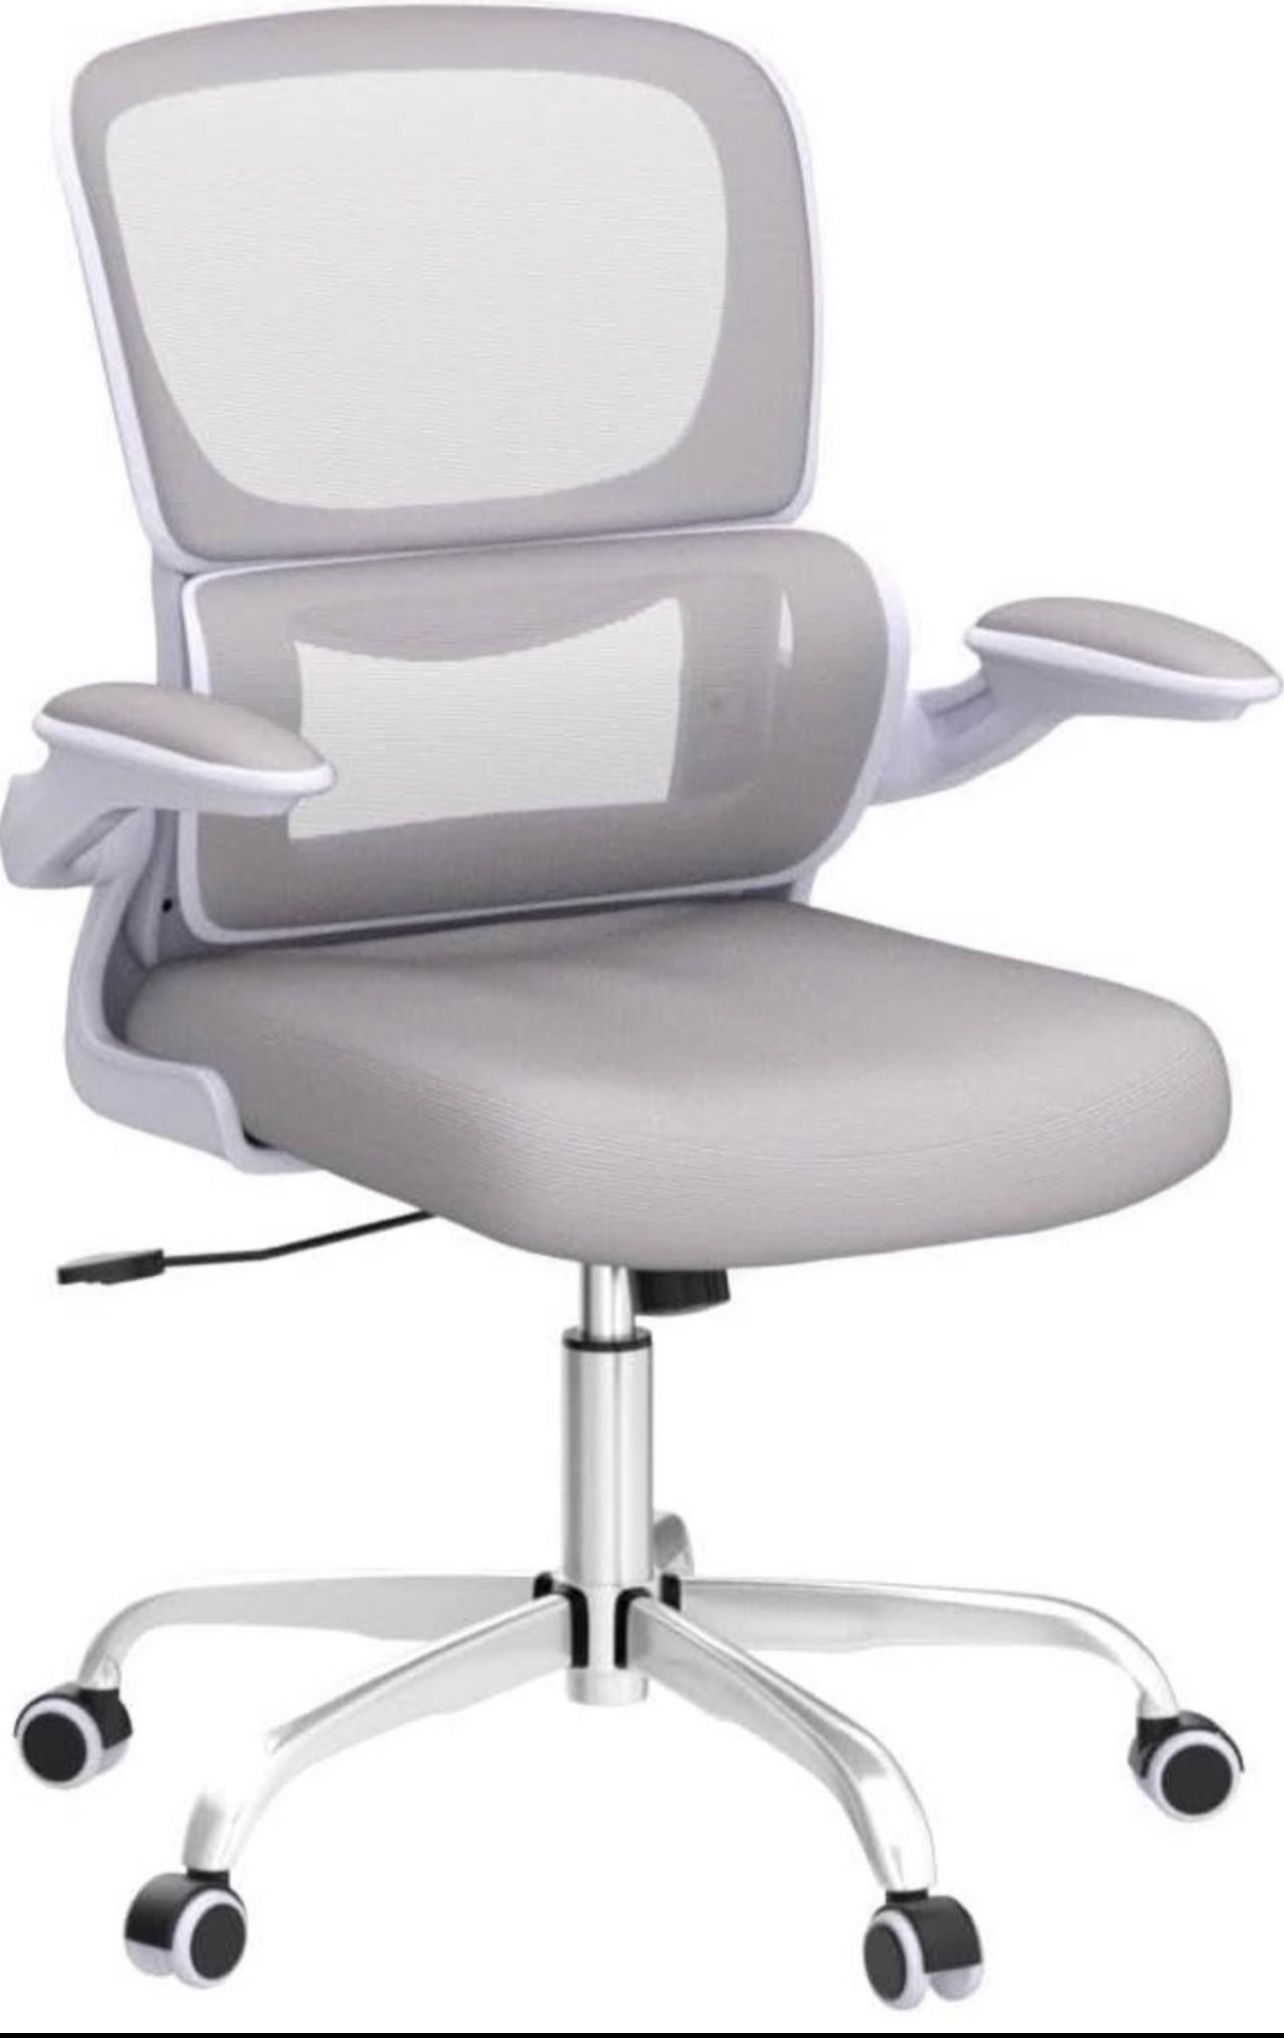 Razzor Ergonomic Office Chair 